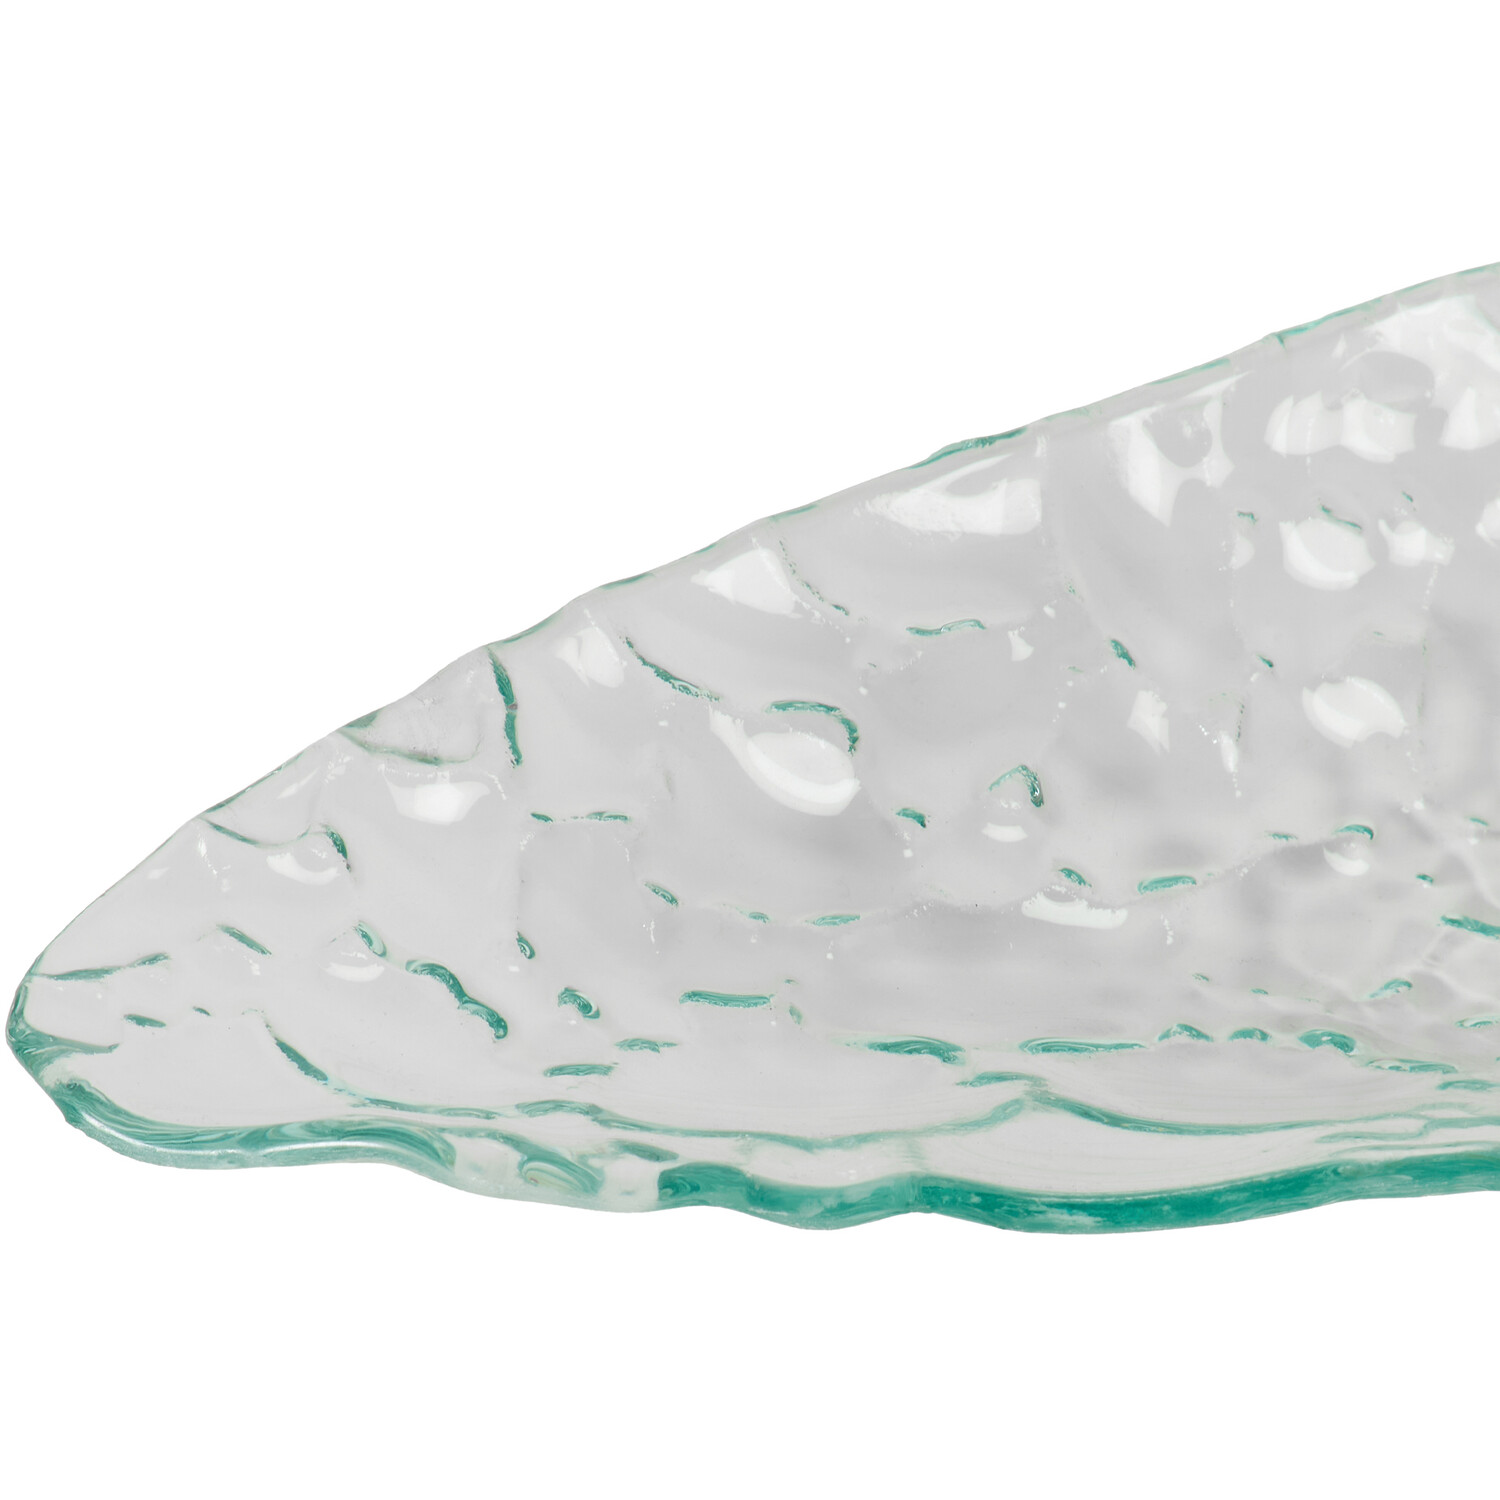 Glass Leaf Bowl - Clear Image 3